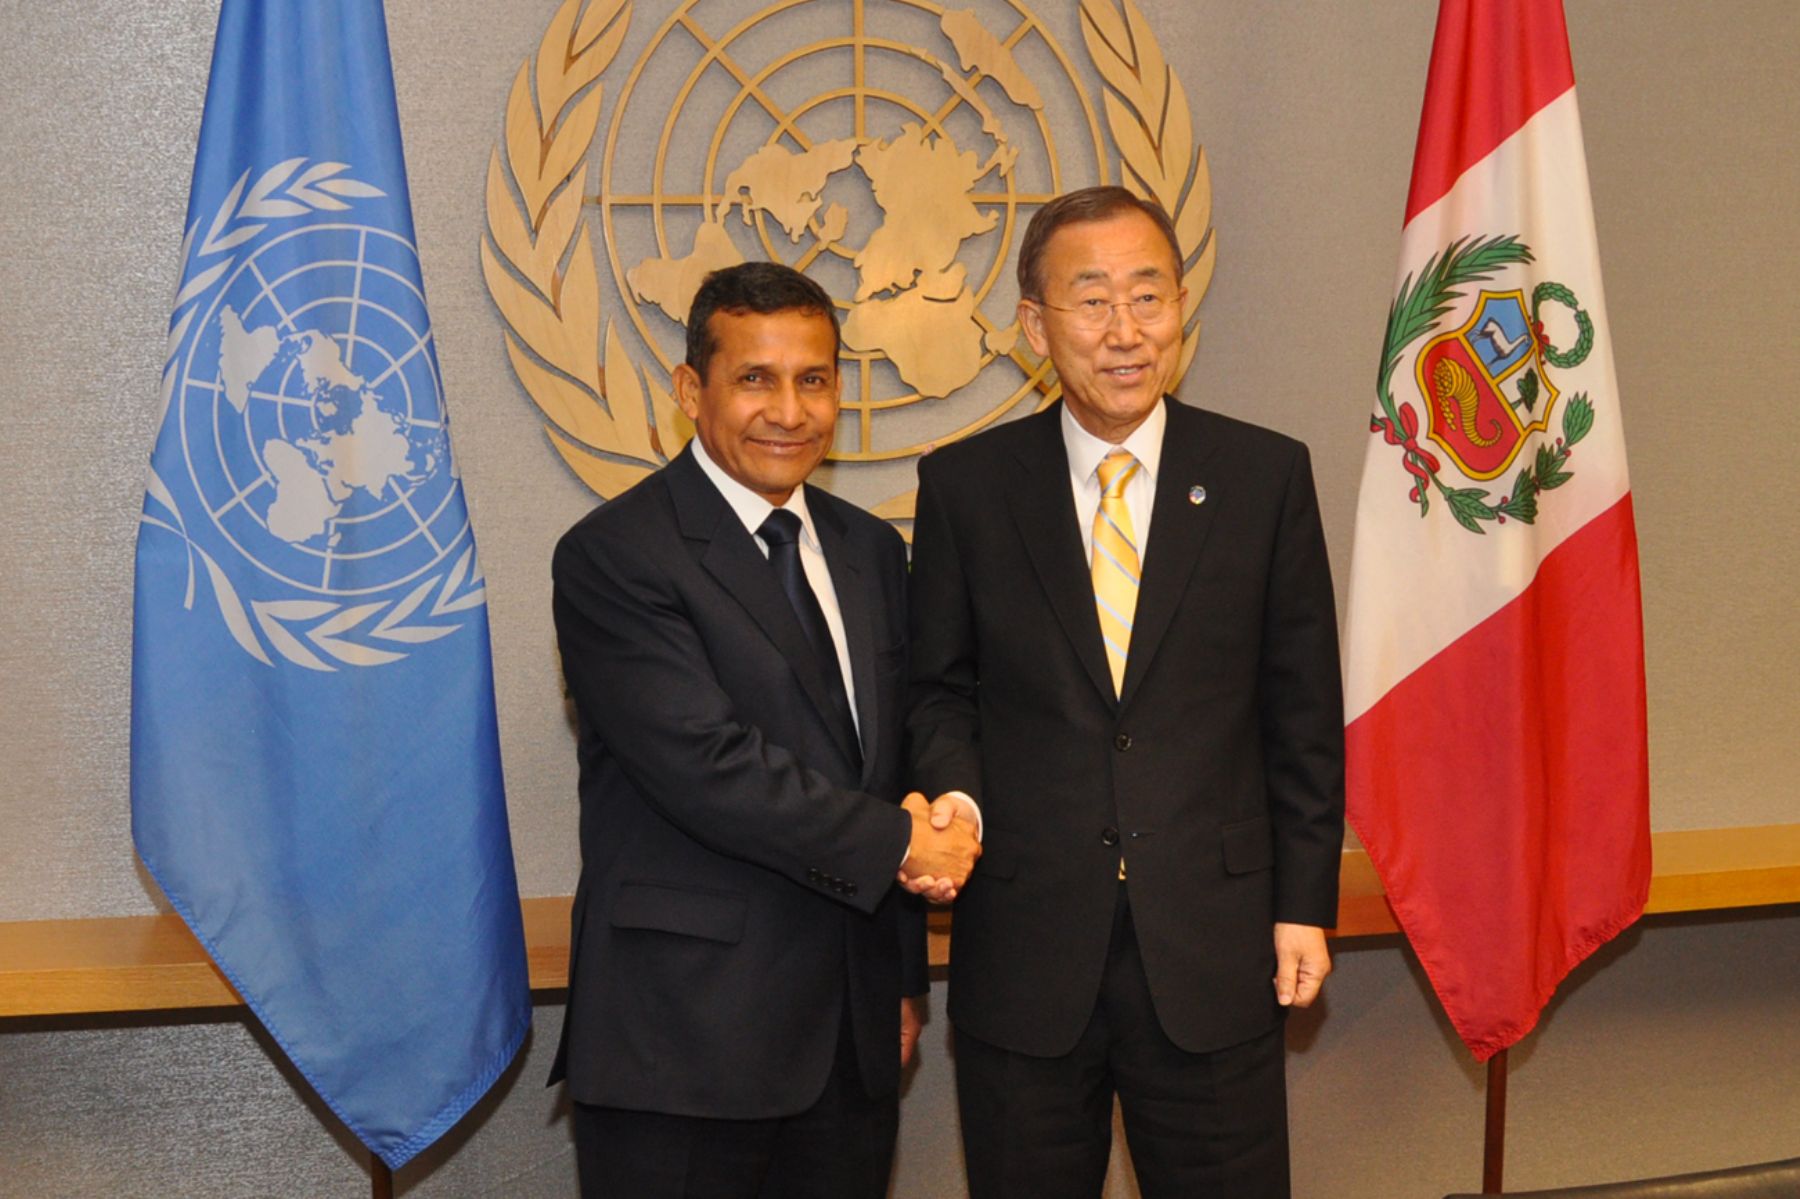 Presidente de la República, Ollanta Humala, junto al Secretario General de la ONU, Ban Ki-moon.
 Foto: ANDINA/Prensa Presidencia